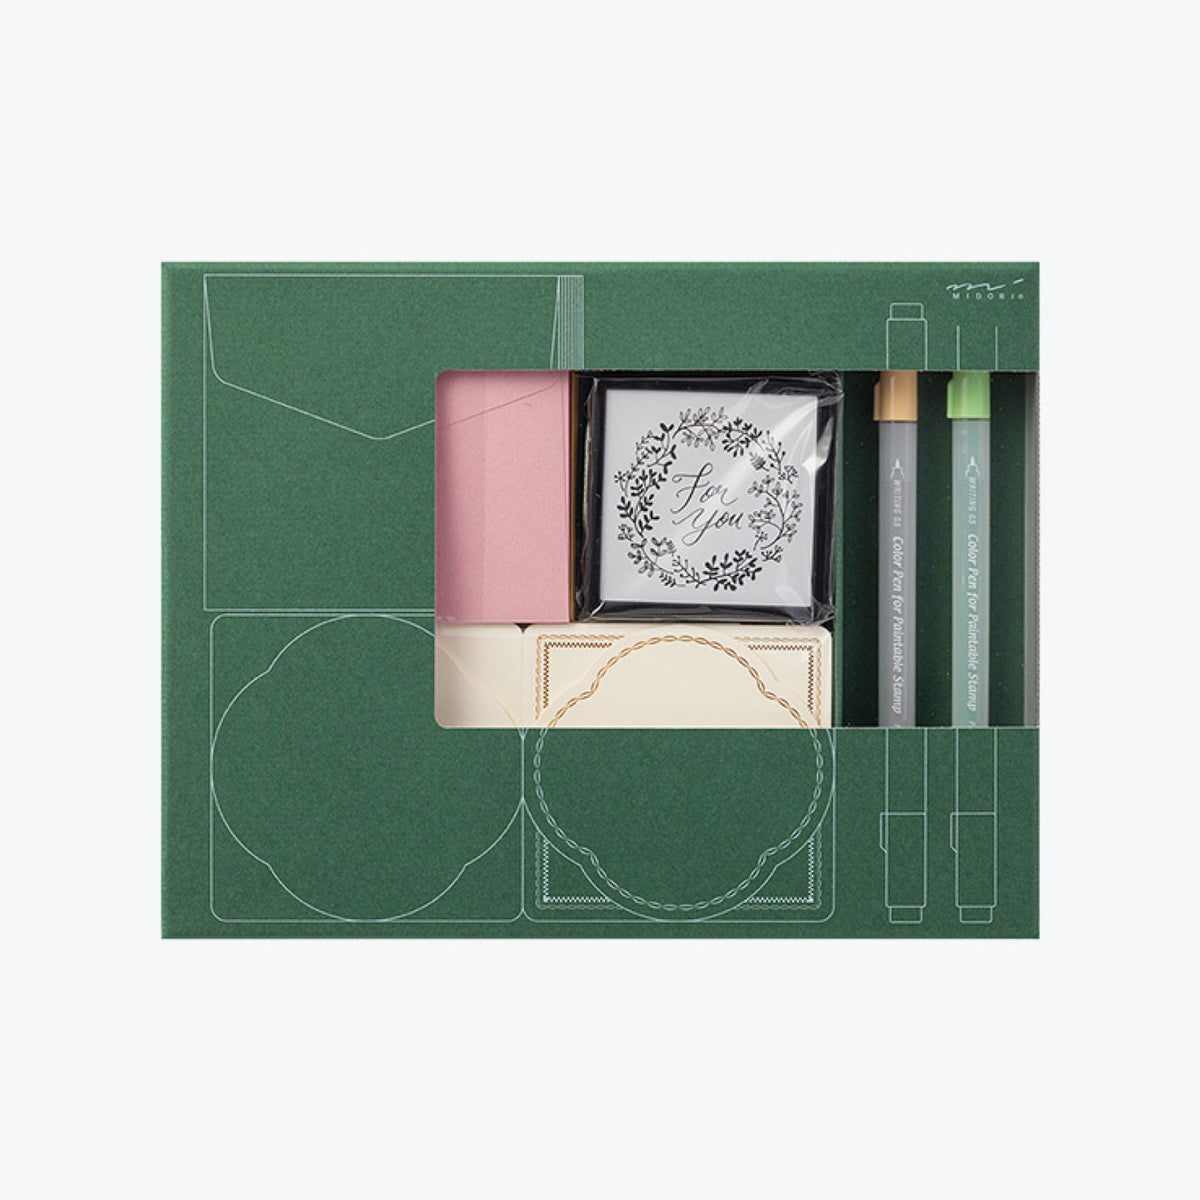 Midori - Stamp Kit - Self-Inking - Wreath (Limited Edition)